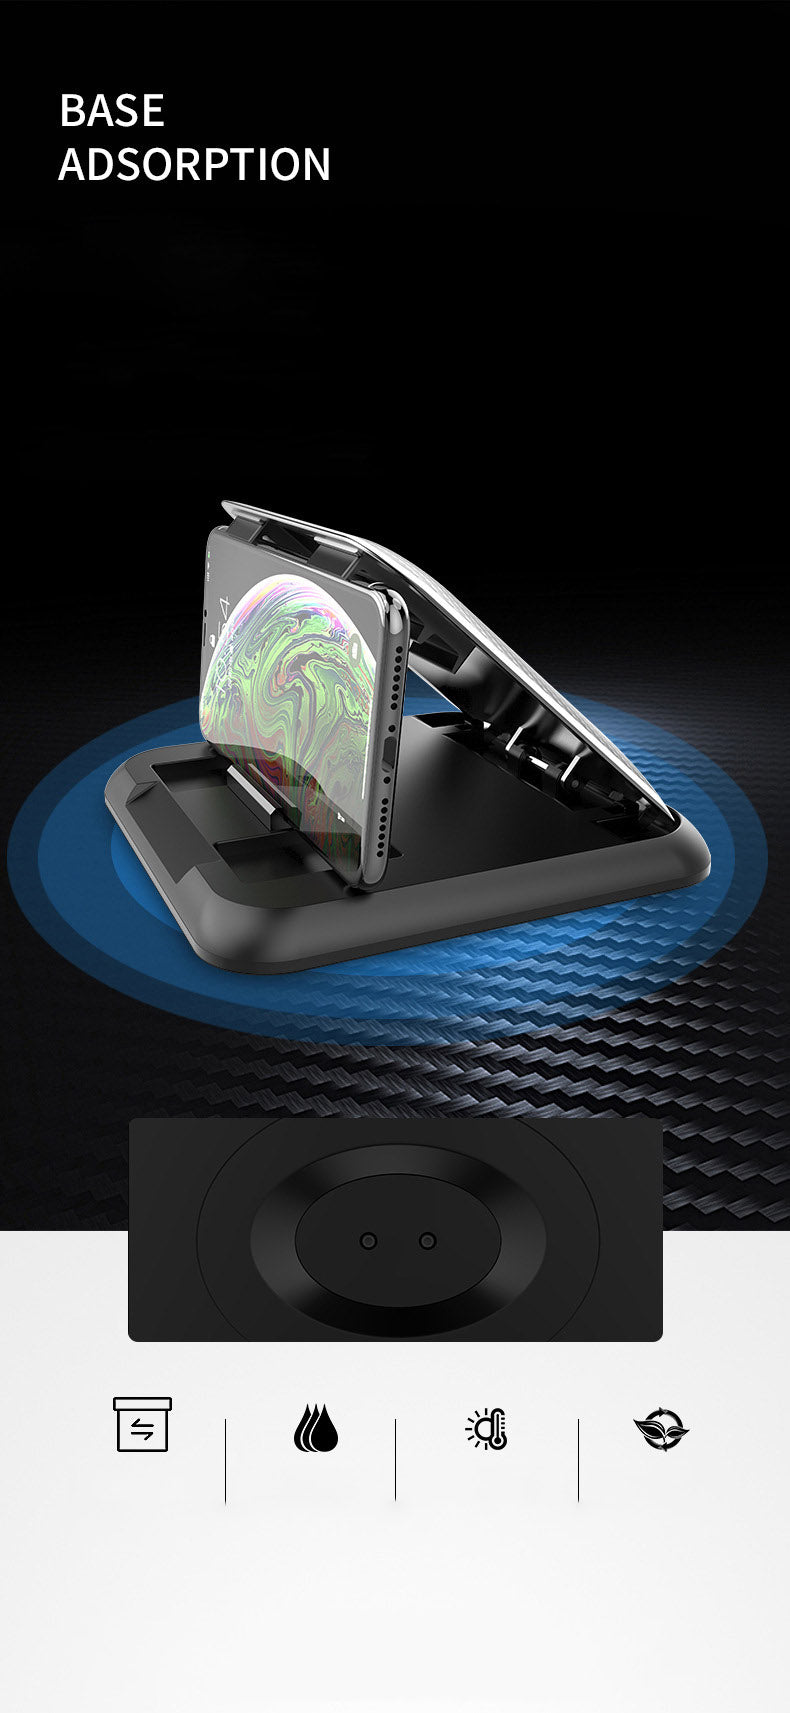 Universal Car Mobile Phone Holder Collapsible Phone GPS Bracket